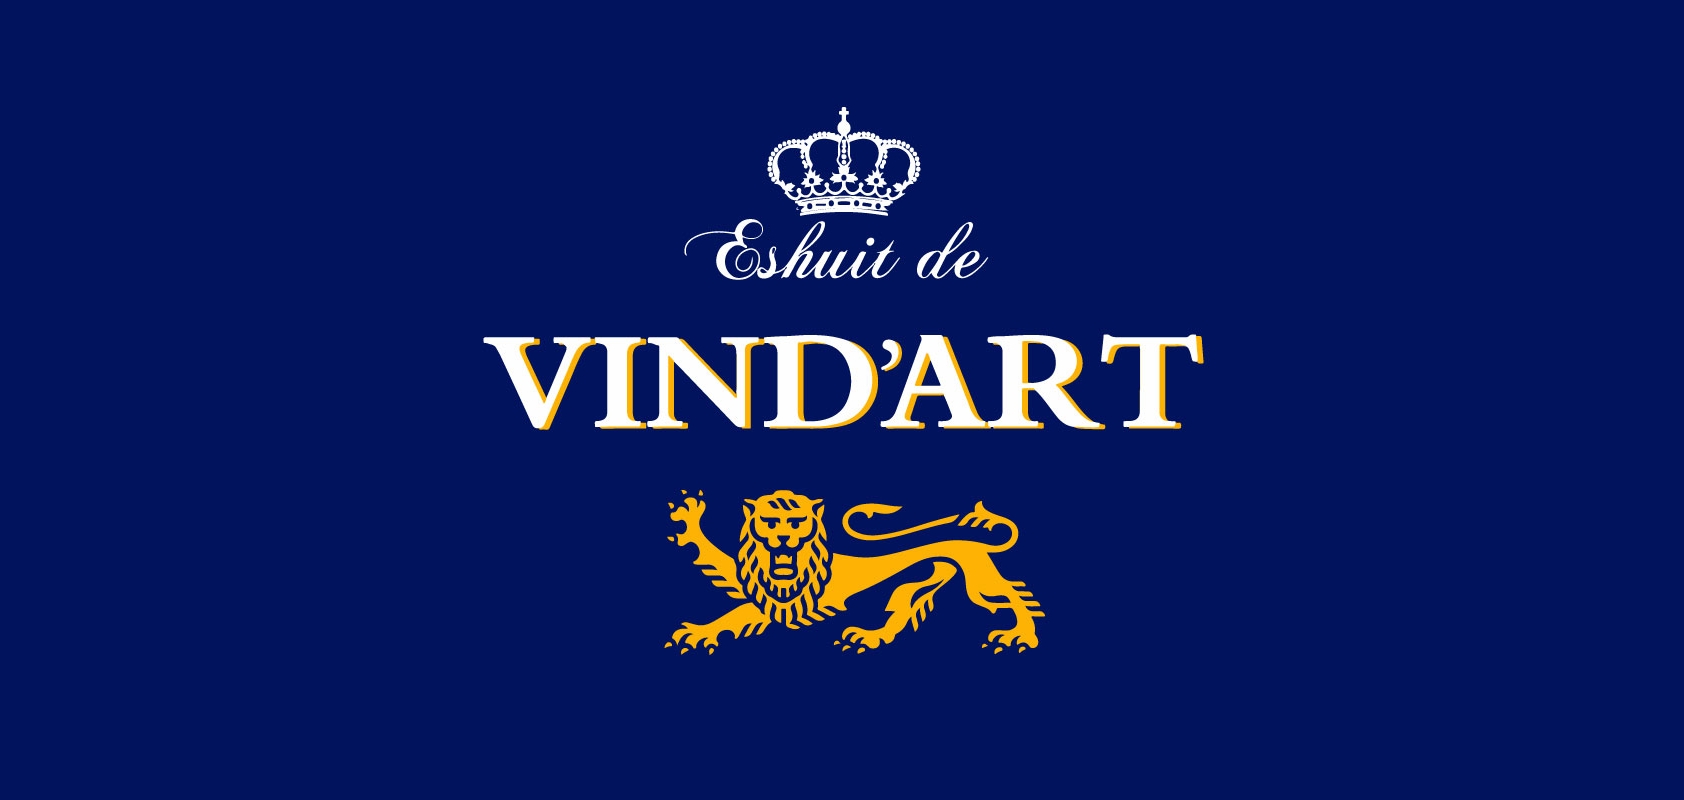 vindart是什么牌子_vindart品牌怎么样?